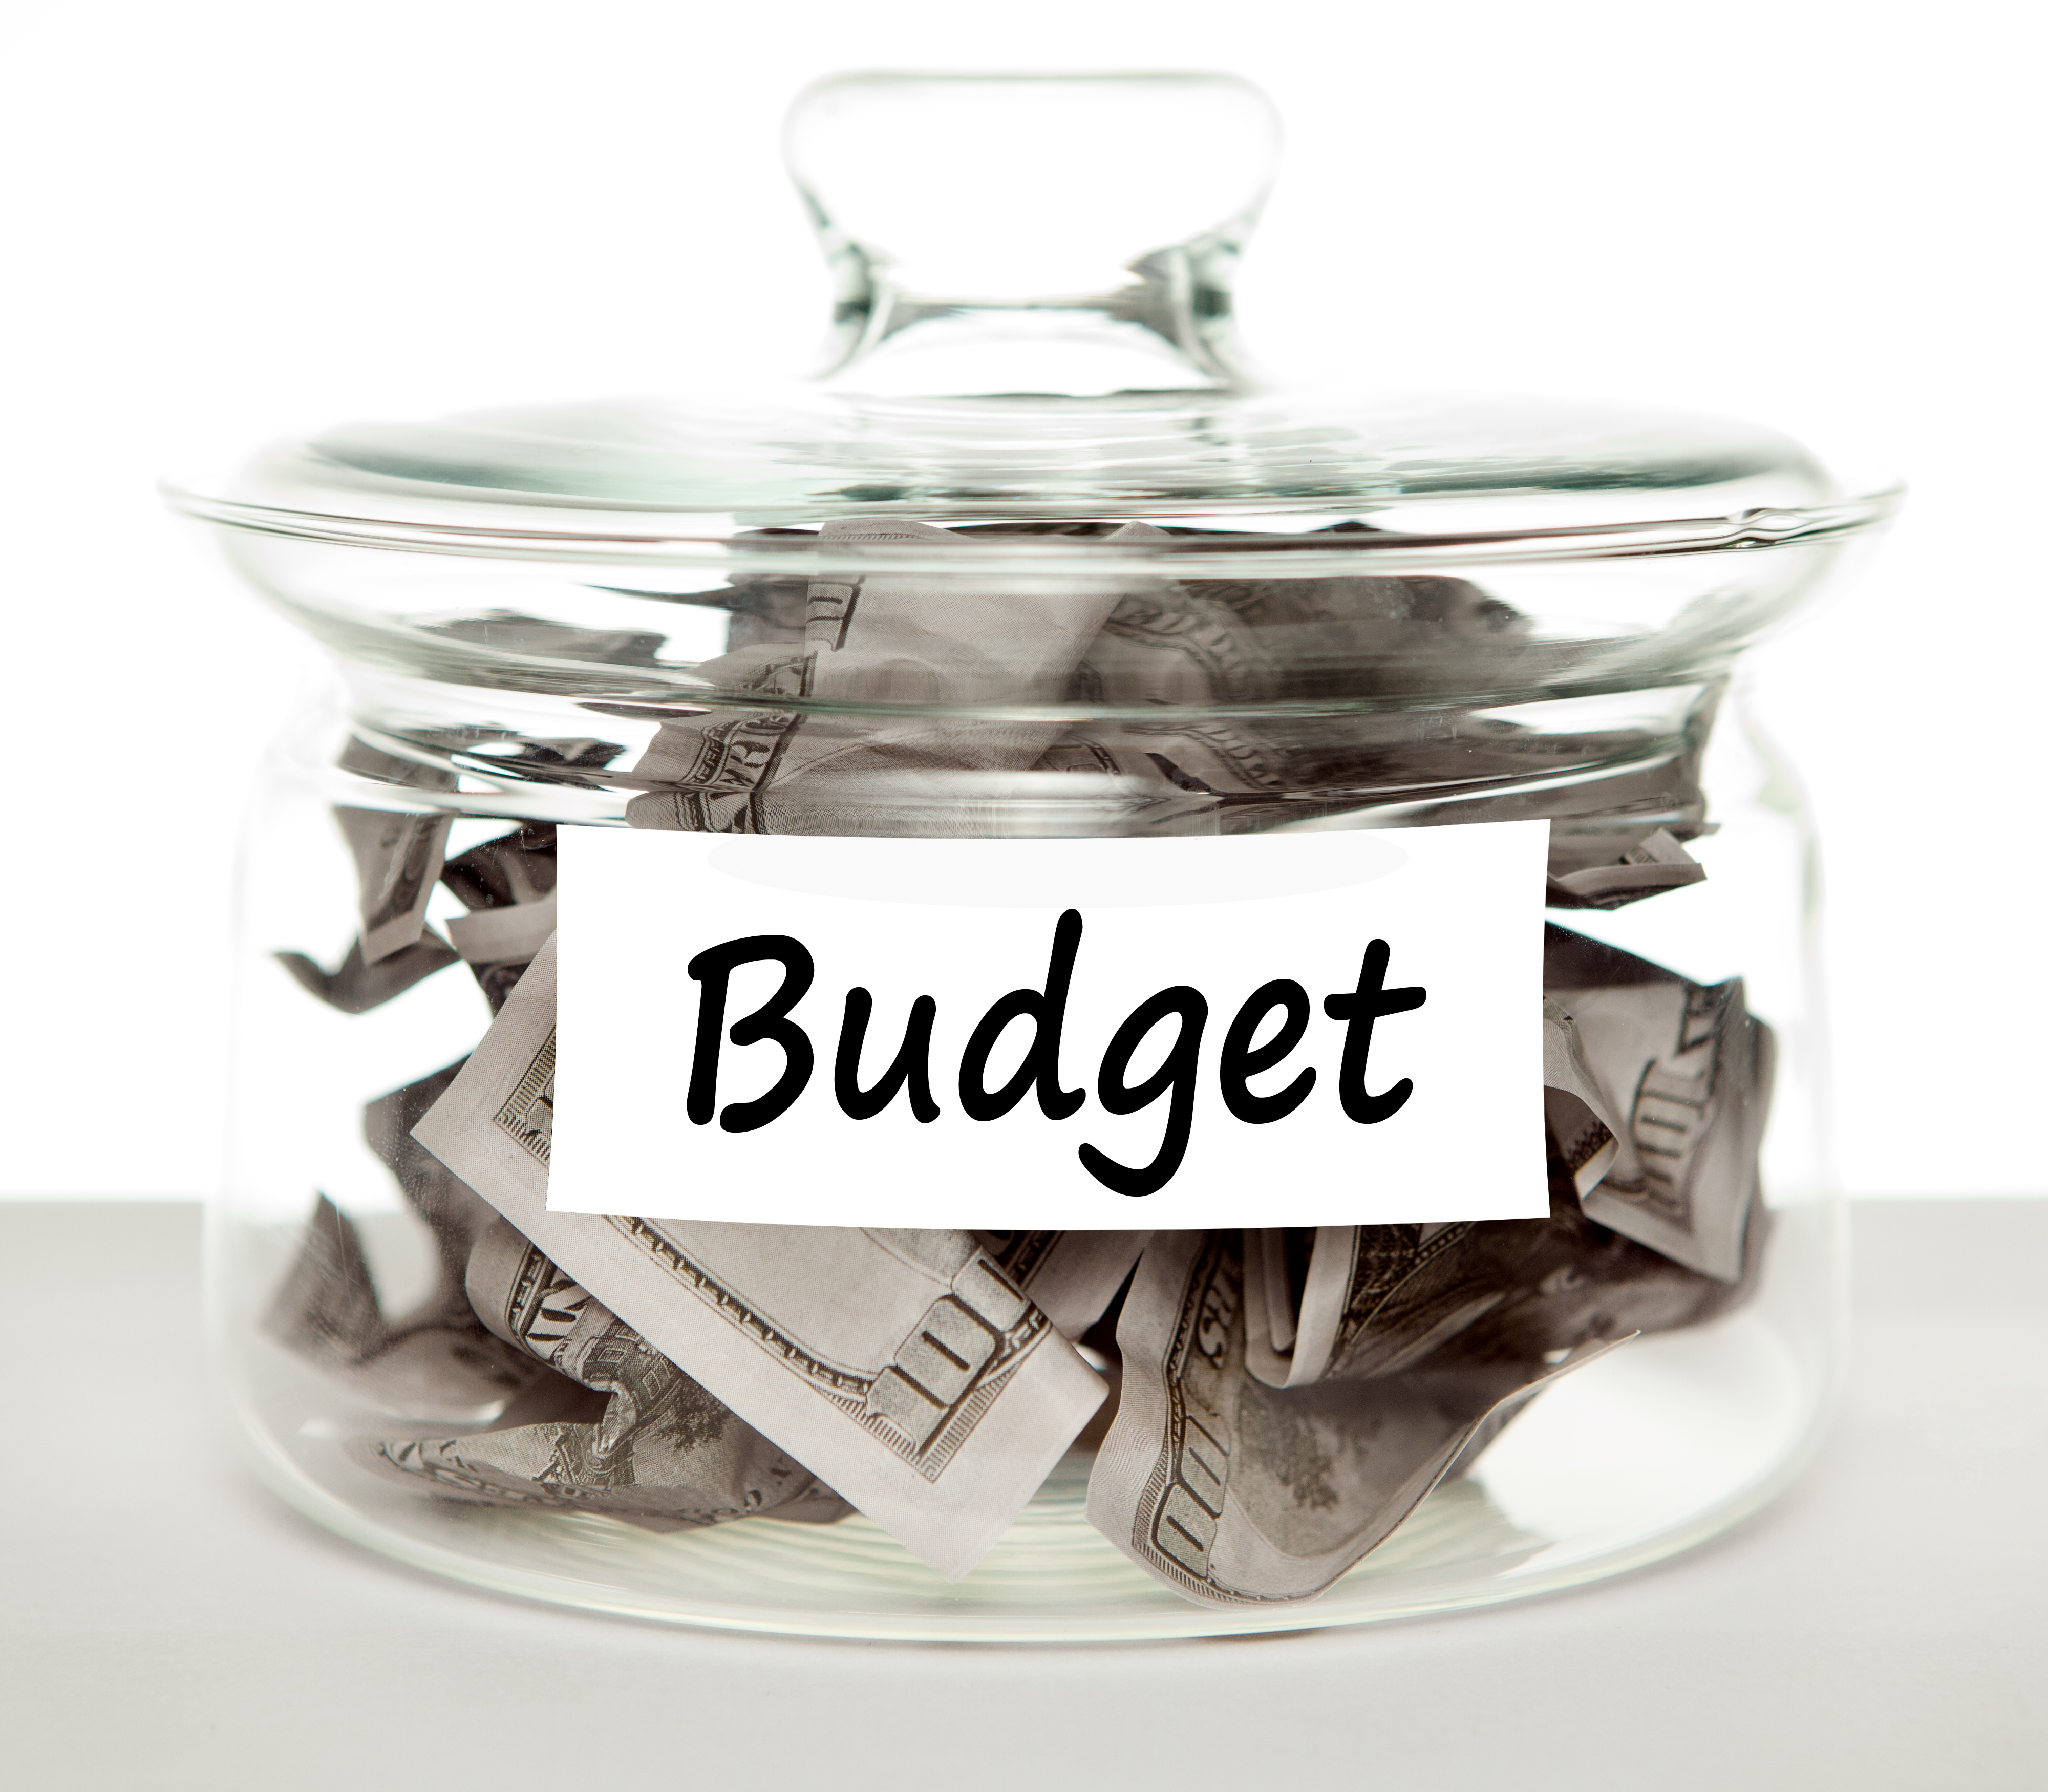 Traditional Budgeting